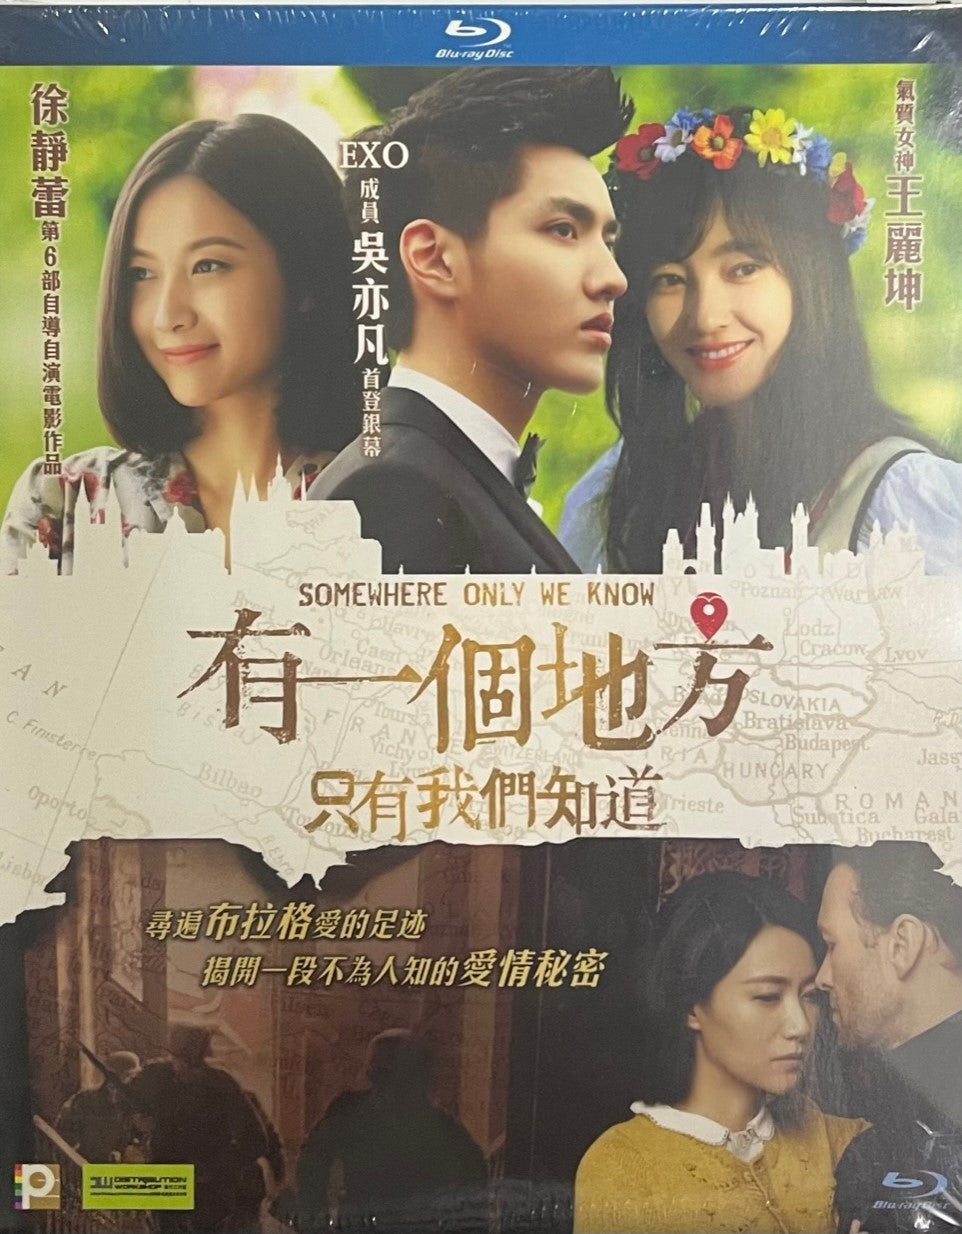 Somewhere Only We Know 有一個地方只有我們知道 2015 (Mandarin Movie) BLU-RAY English Sub (Region A)